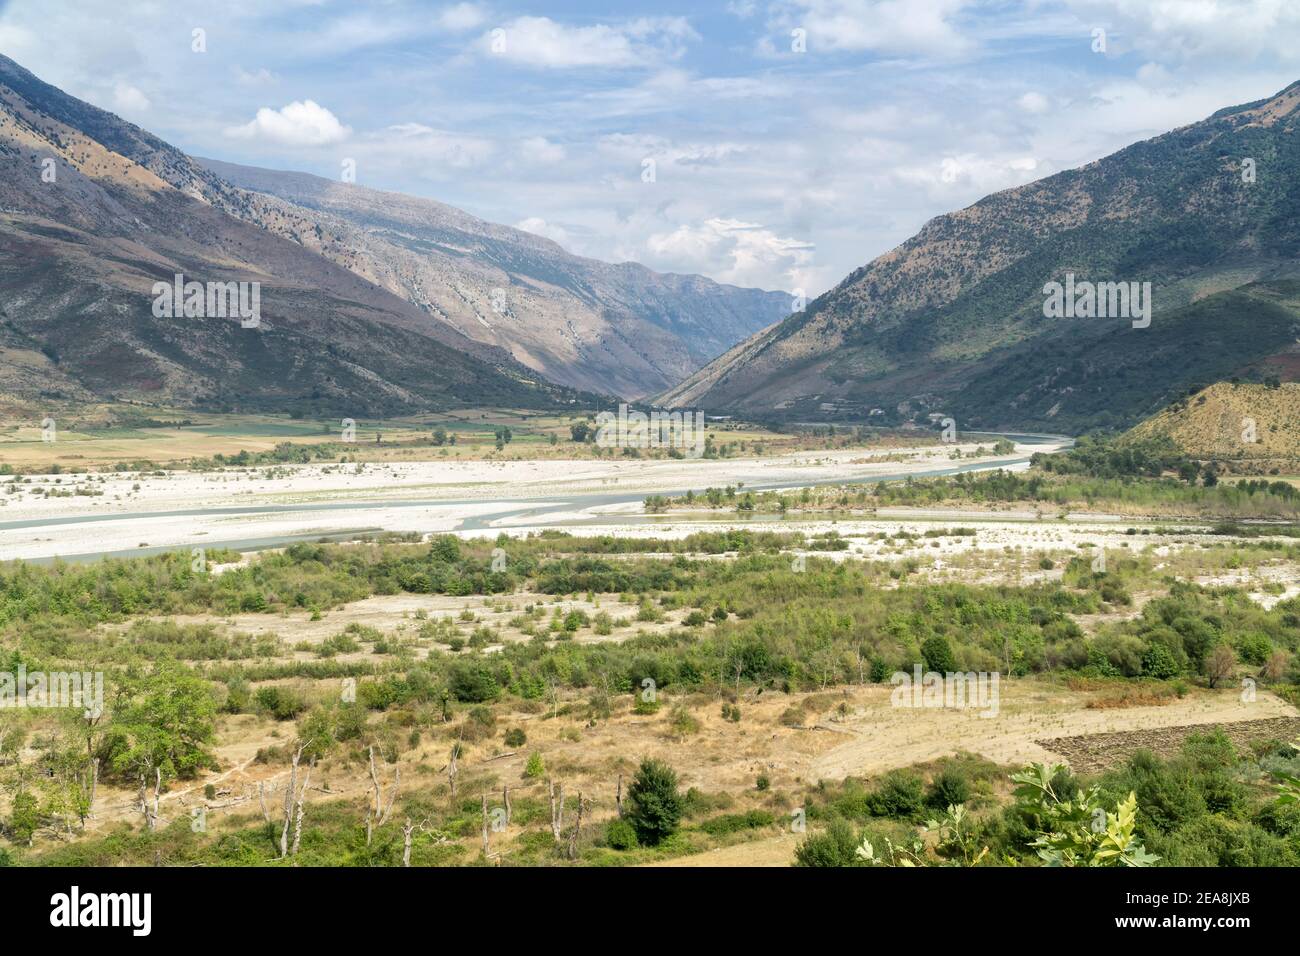 Das Drino River Valley im Sommer, niedriger Wasserstand. Albanien, Bezirk Tepelene, Europa. Stockfoto